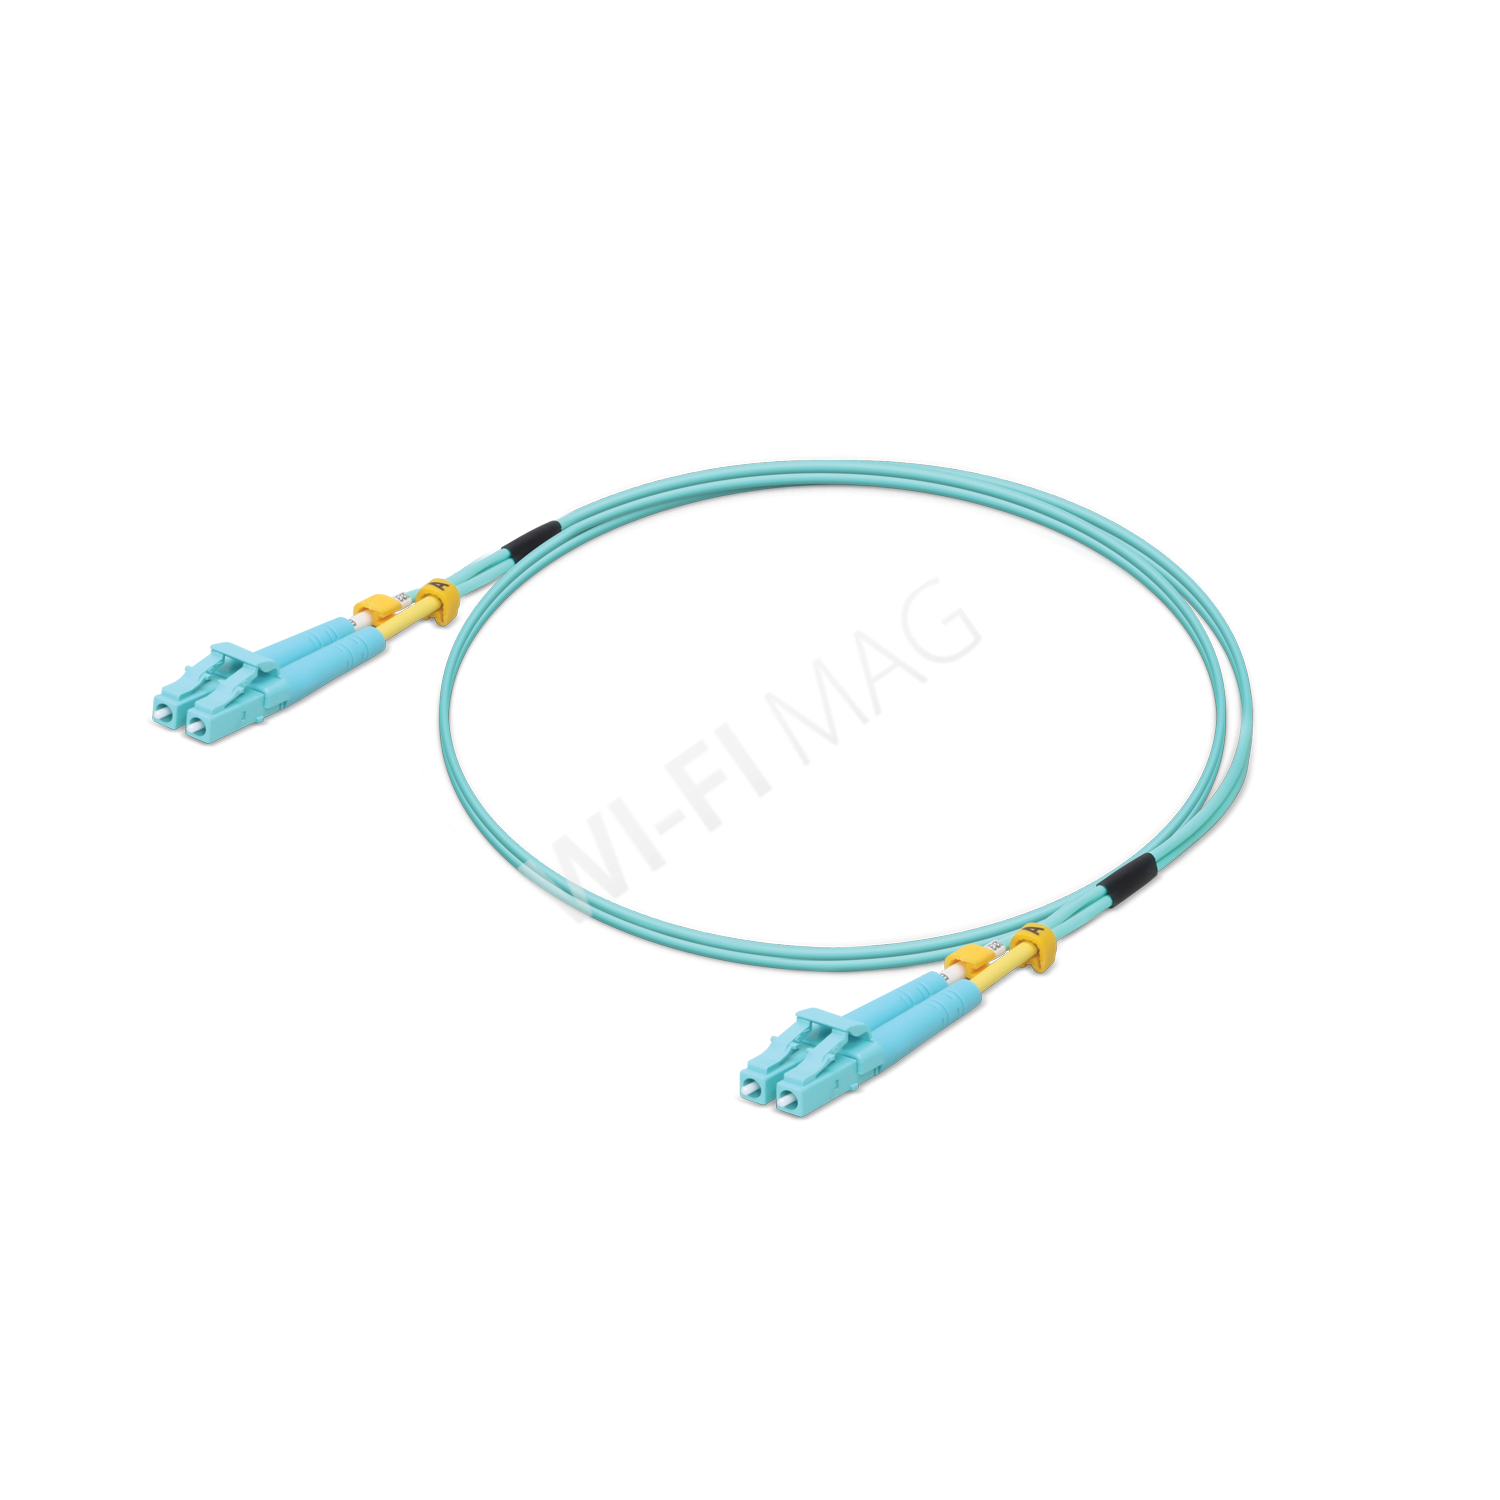 Ubiquiti UniFi ODN Cable 2 m